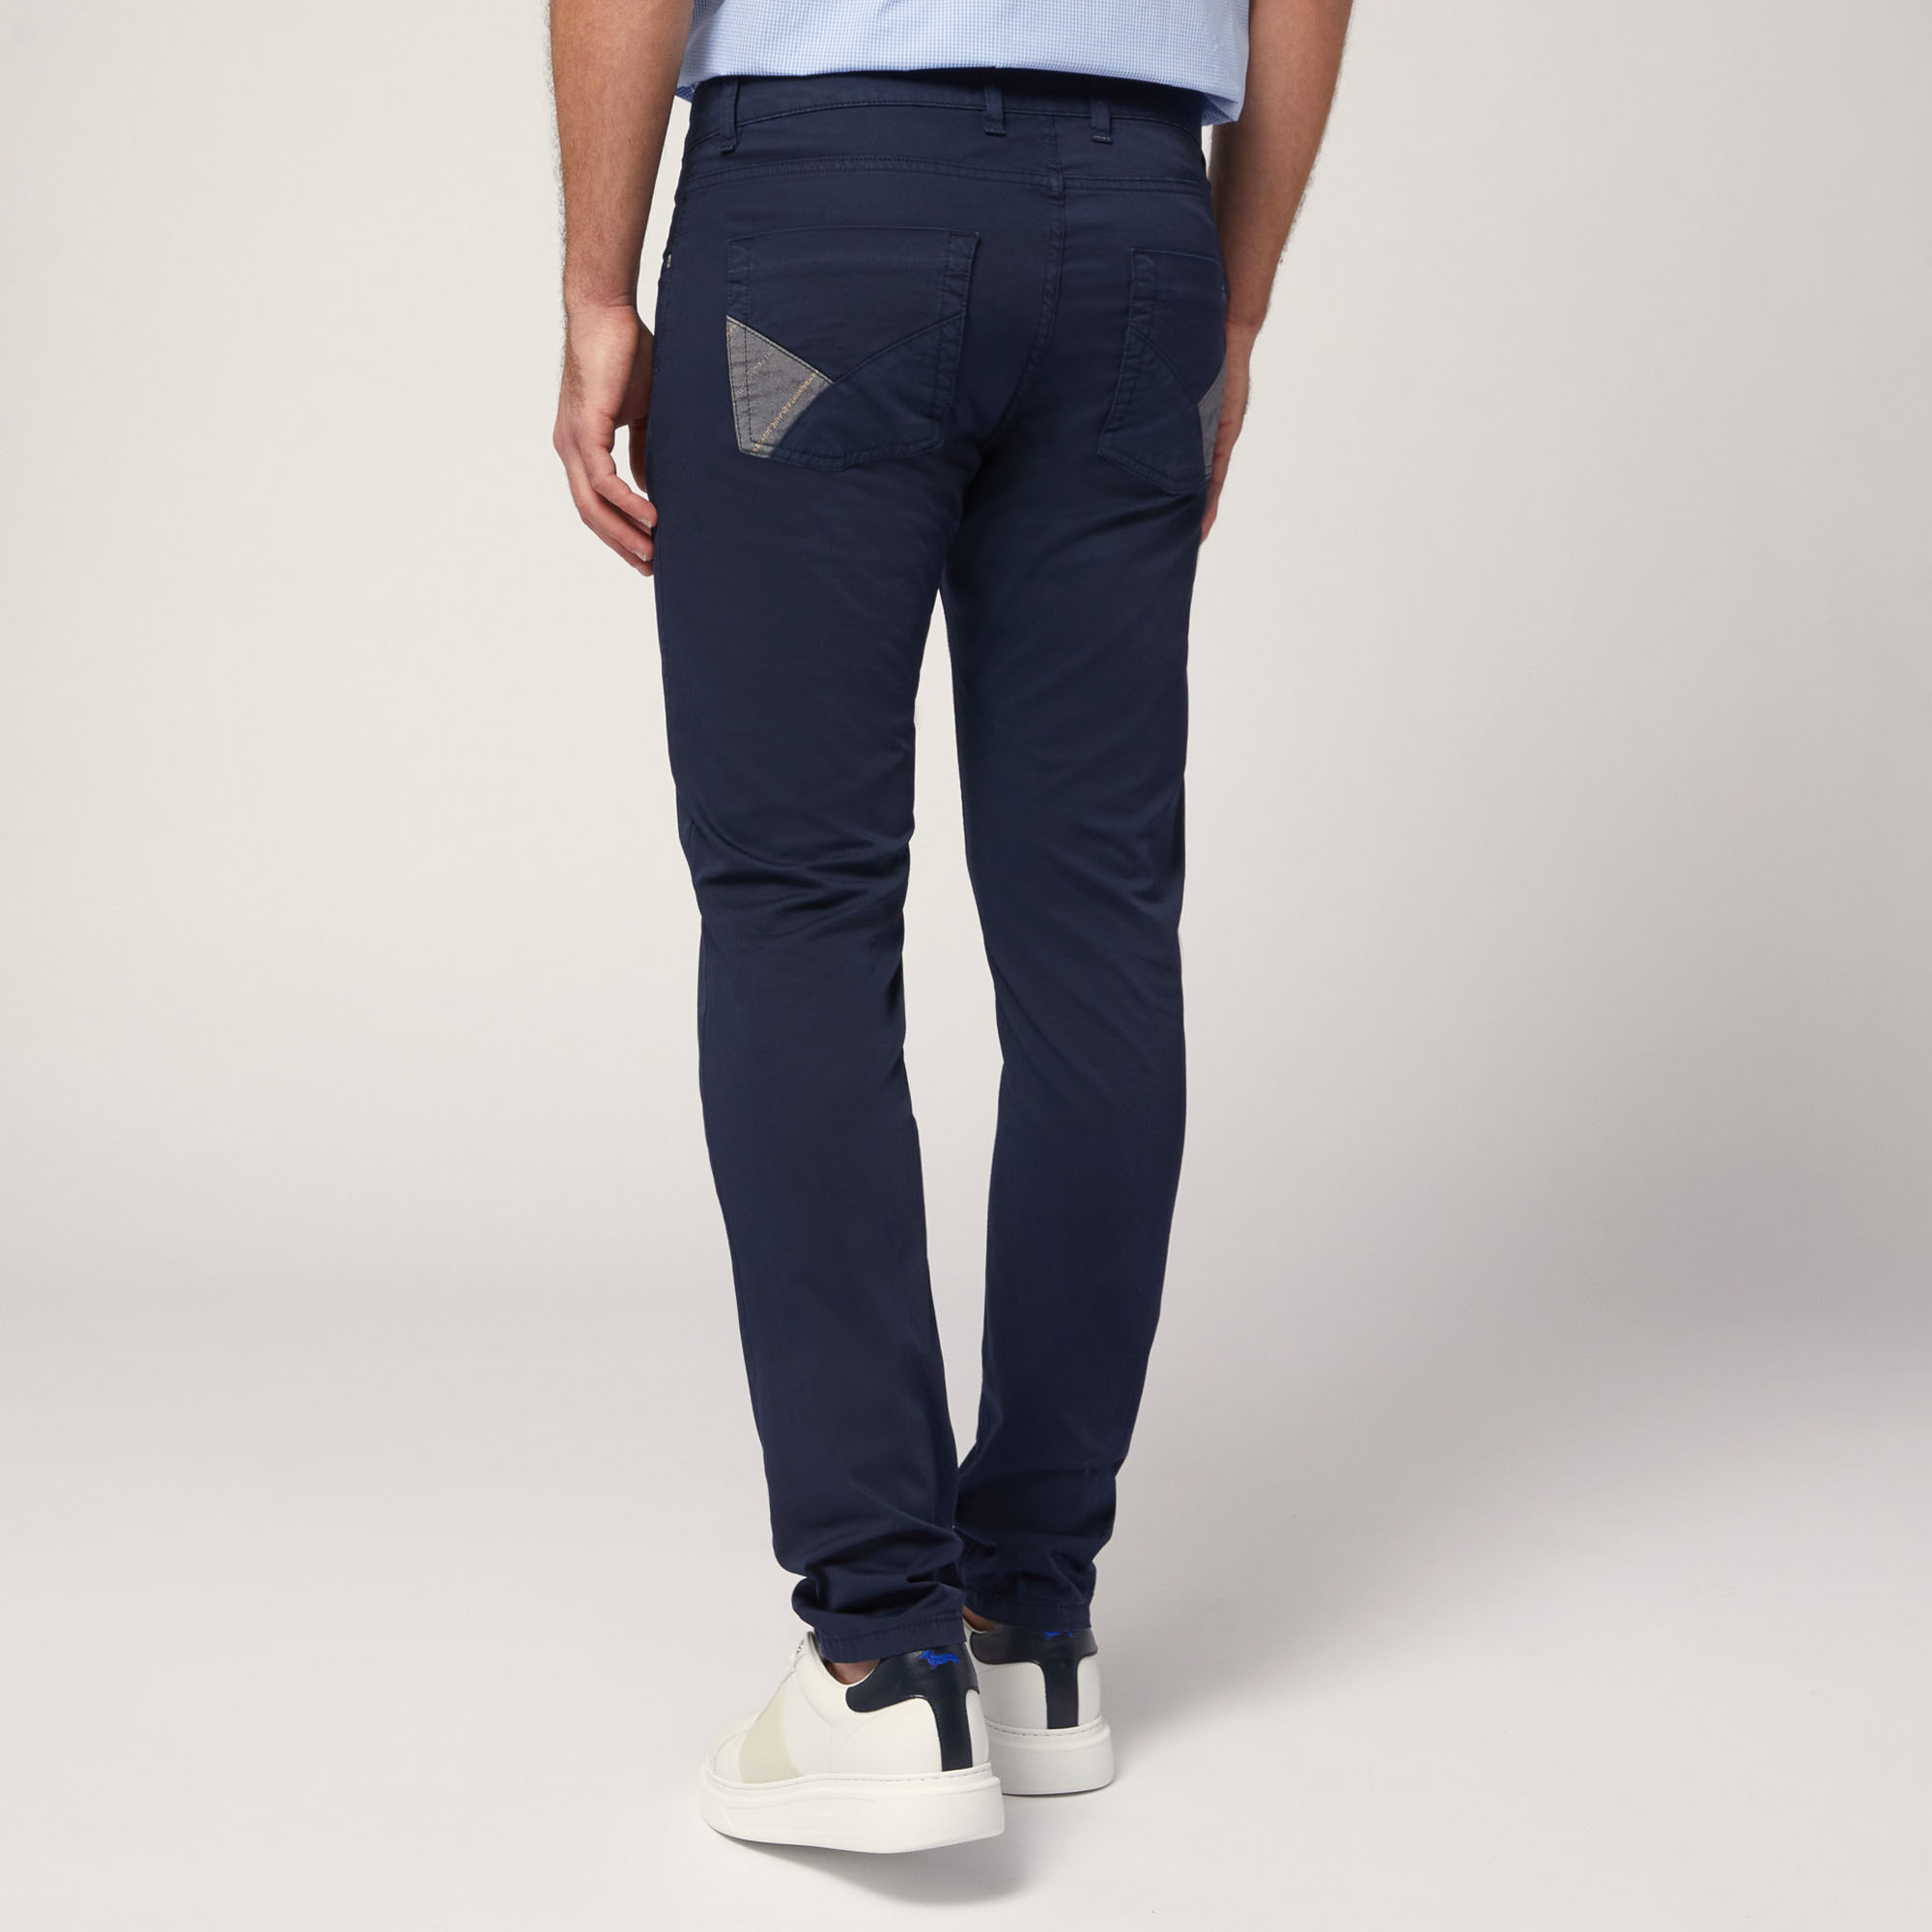 Pantaloni Con Inserti, Blu Navy, large image number 1